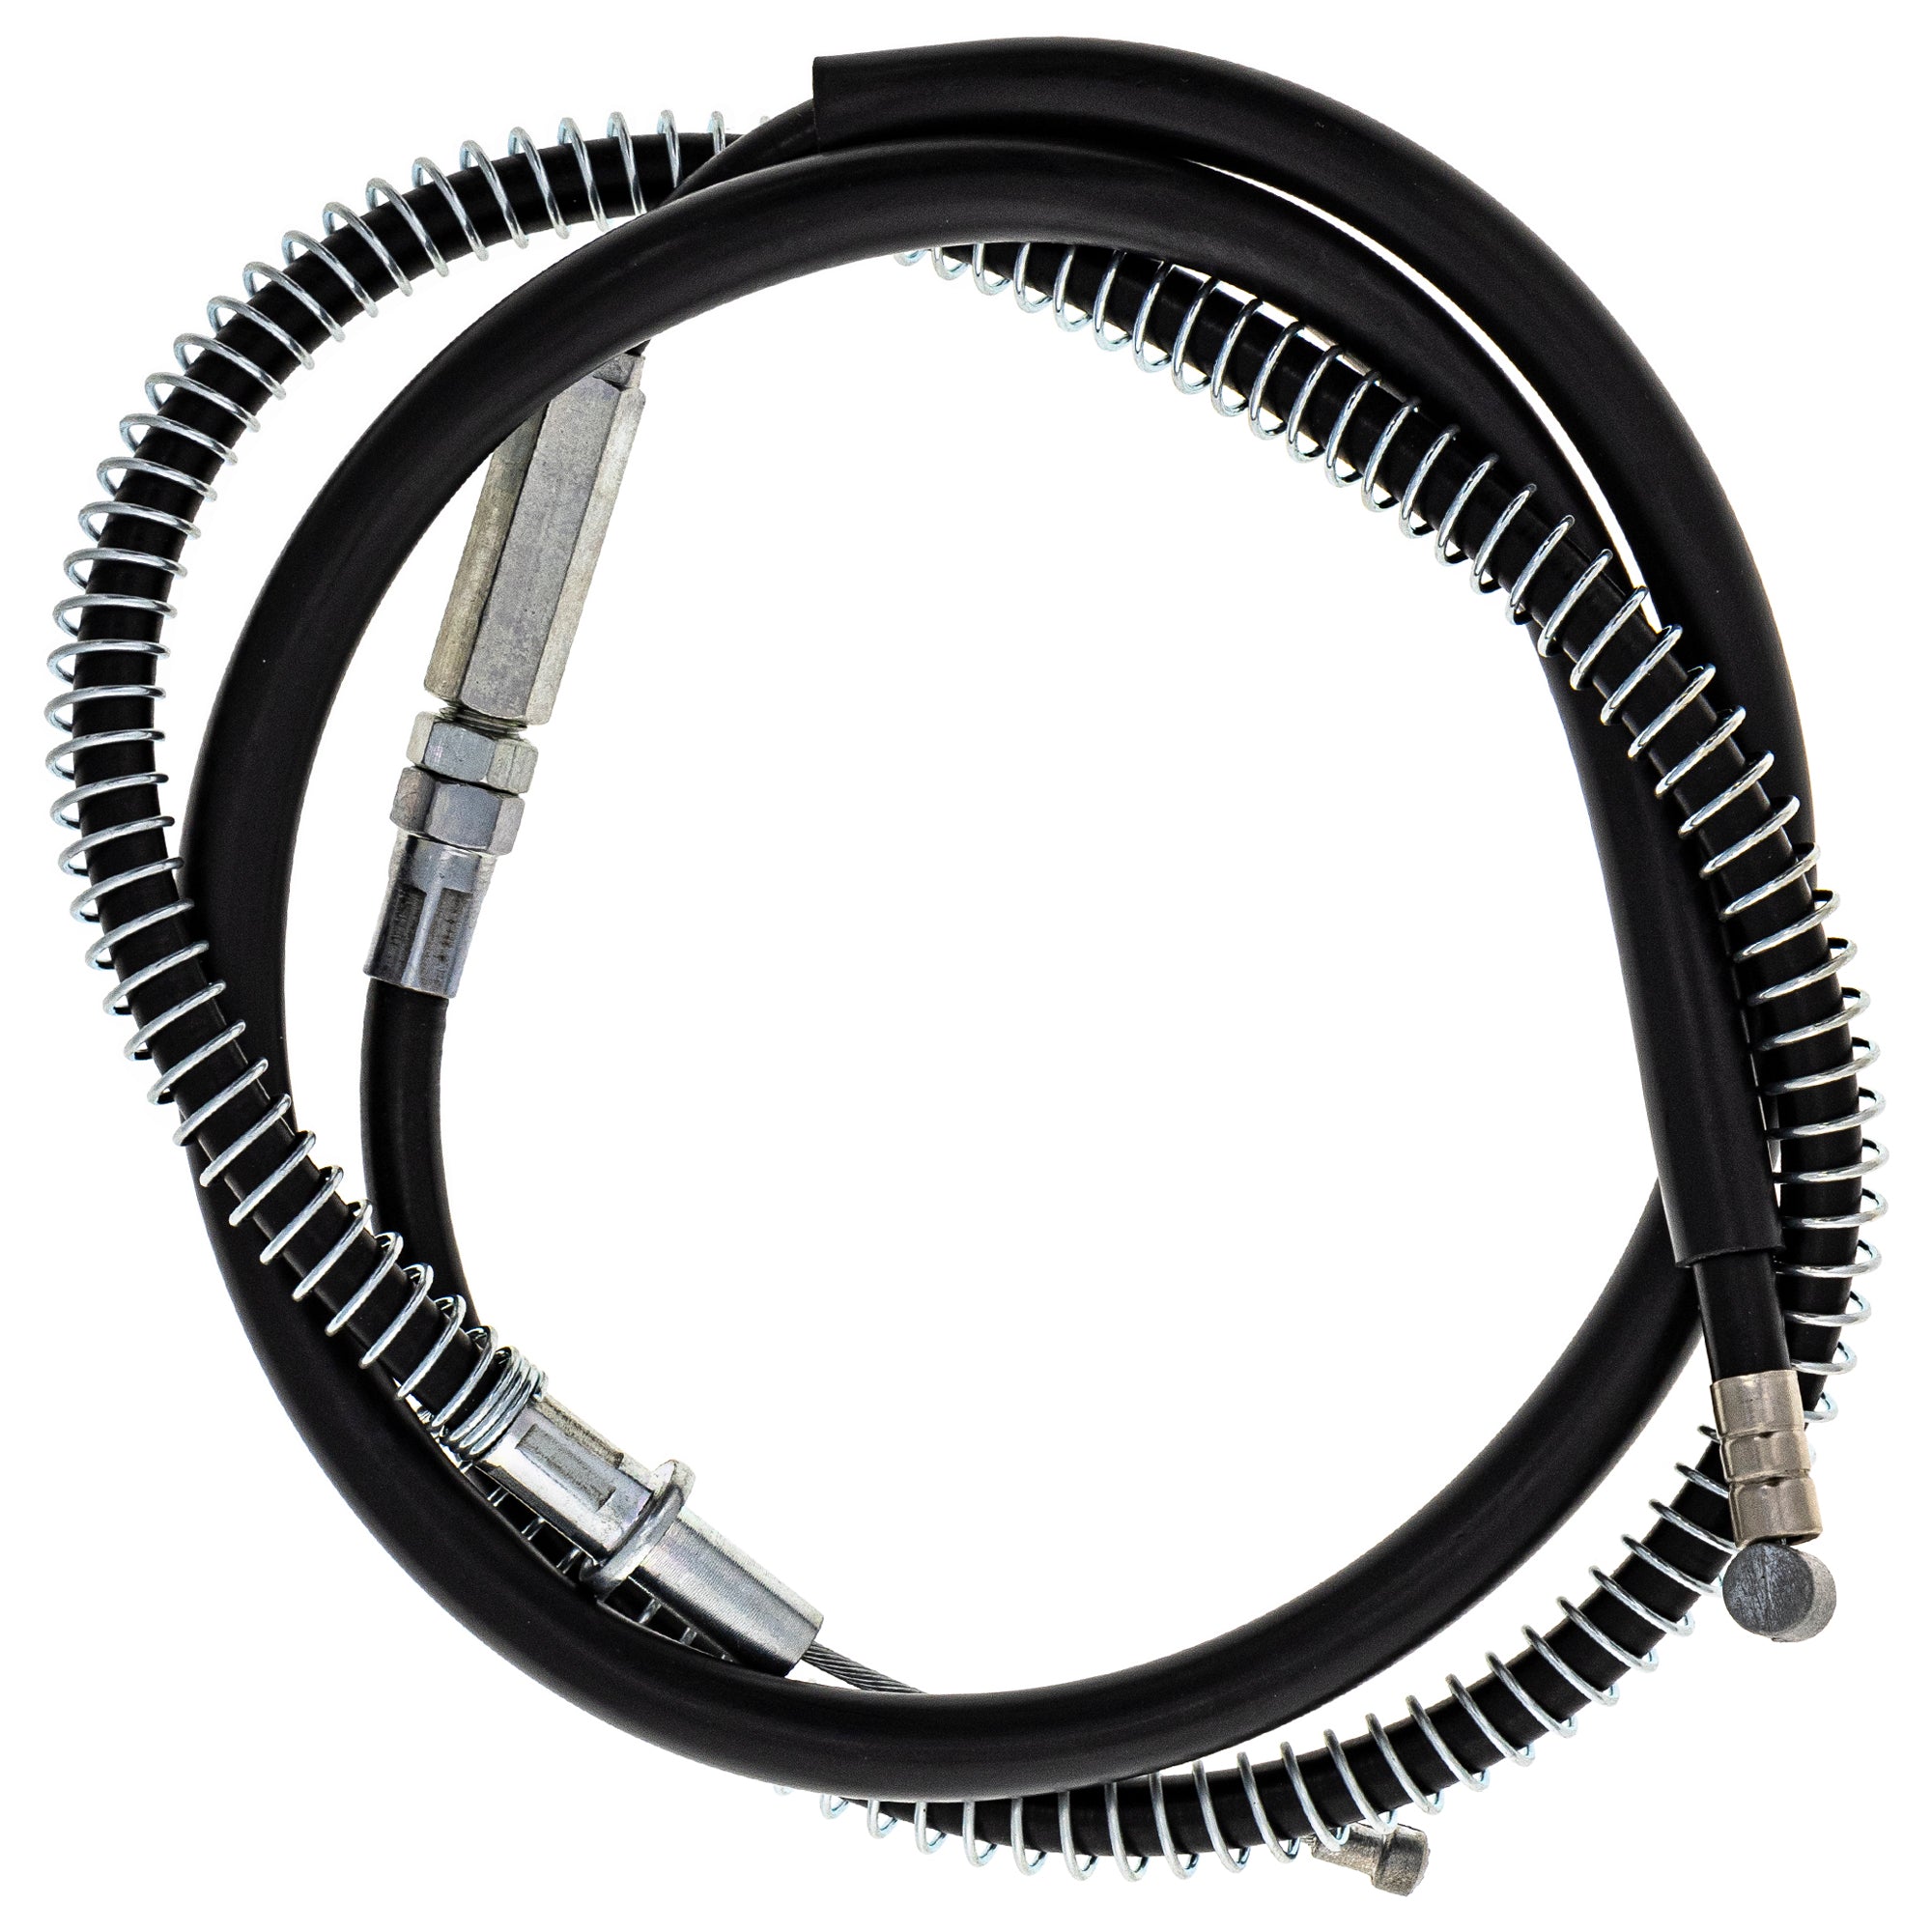 Clutch Cable for zOTHER KZ750L KZ1000R KZ1000D NICHE 519-CCB2295L